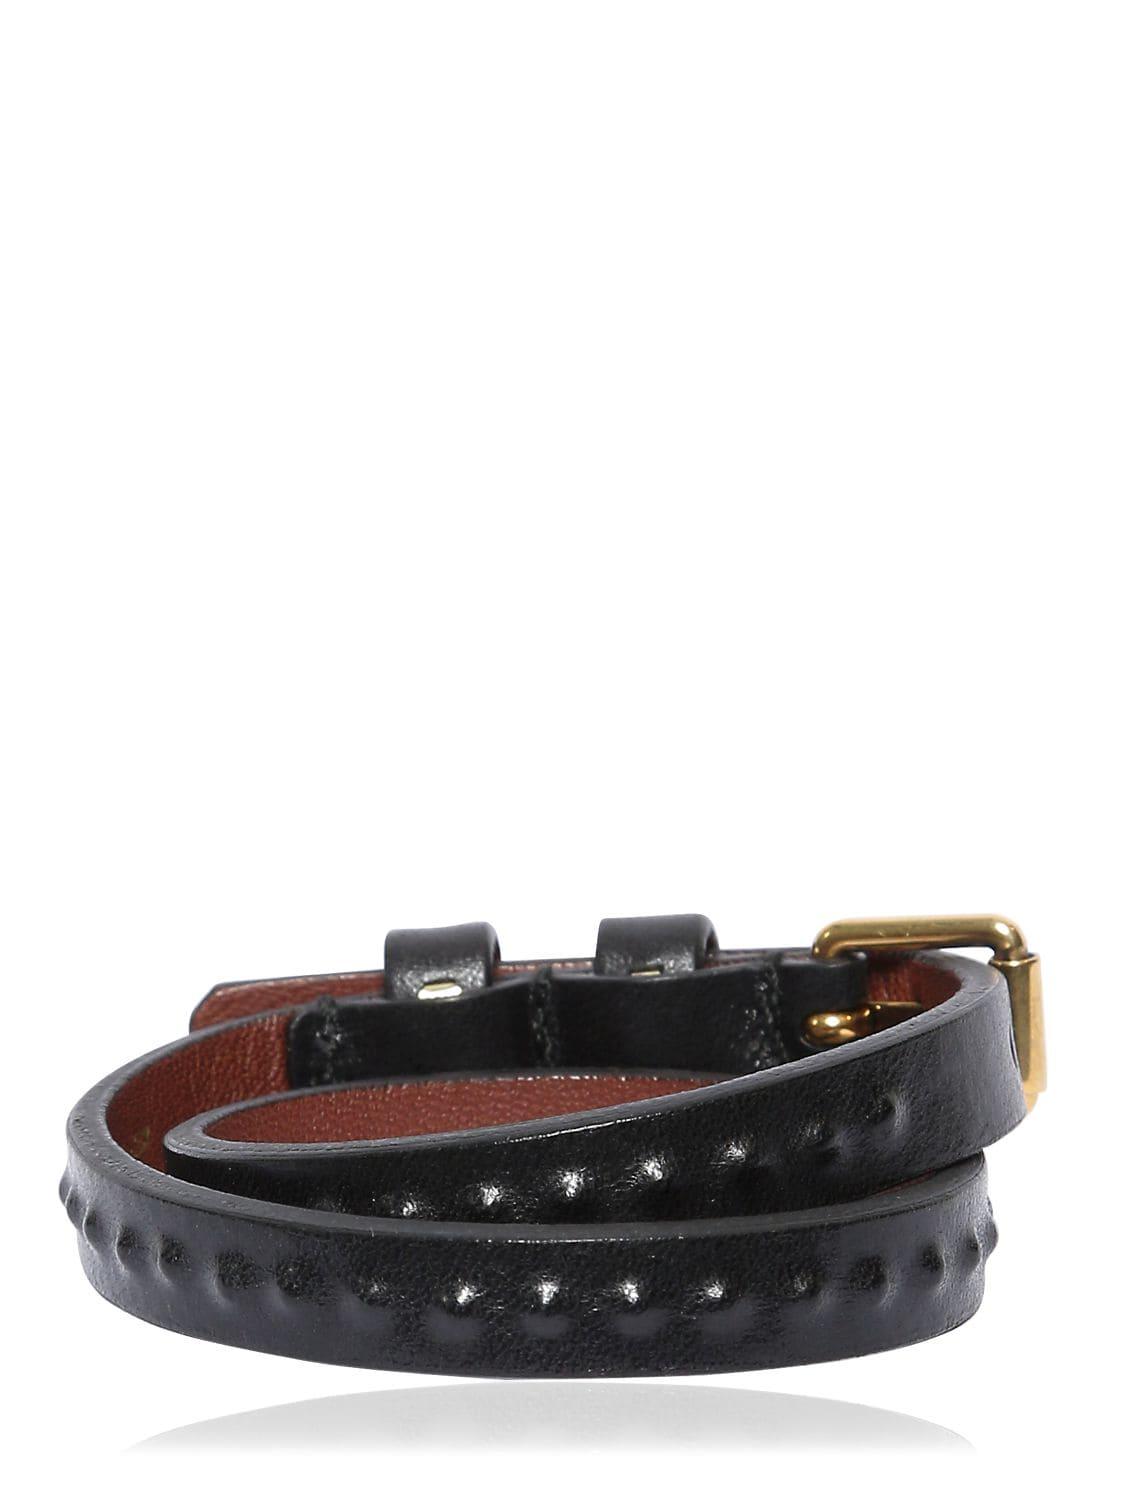 Alexander McQueen Studded Leather Bracelet W/ Charm in Black for Men - Lyst